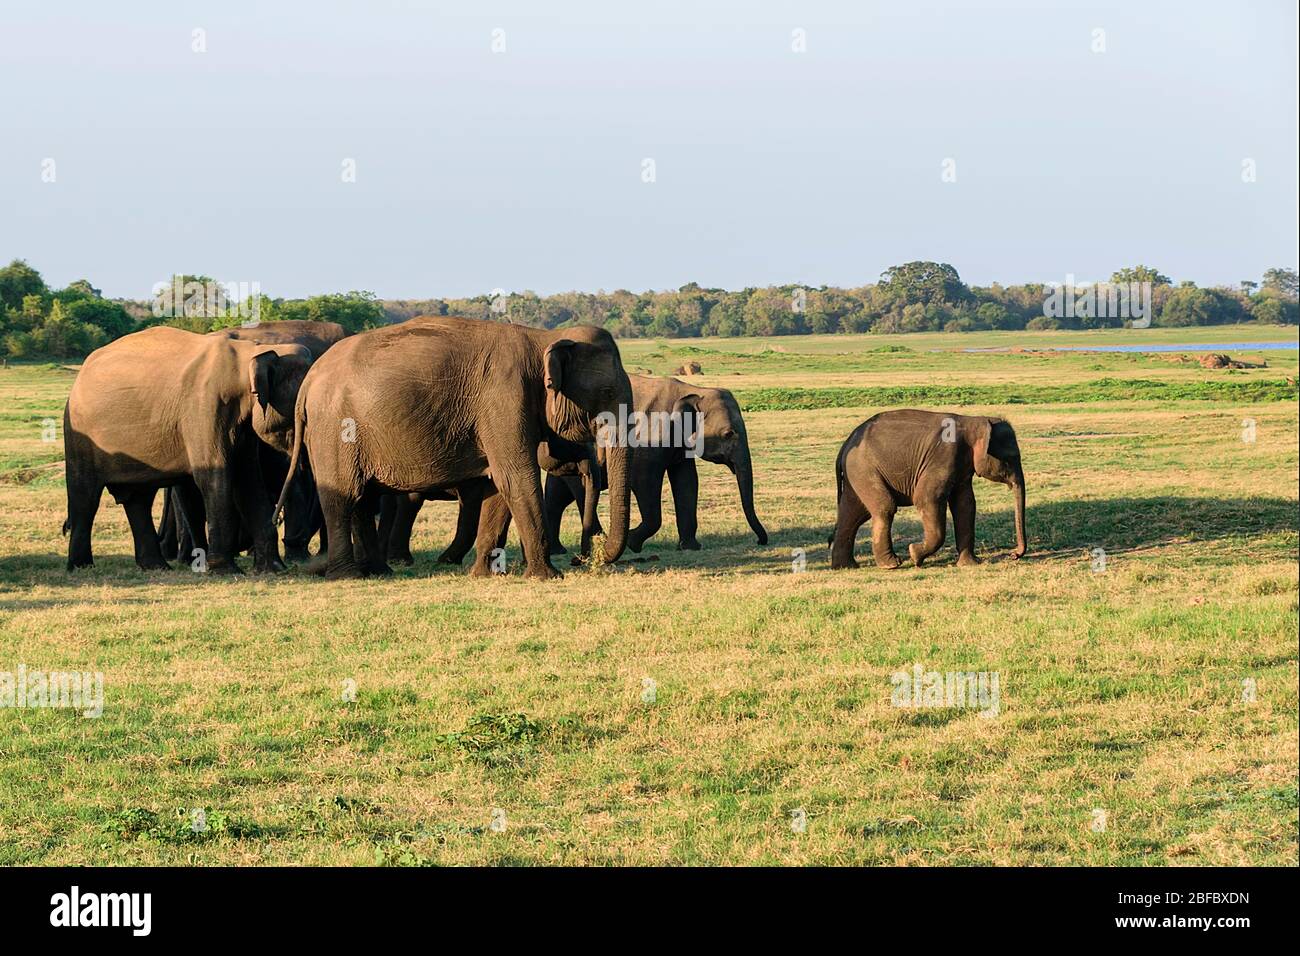 Parque Nacional Kaudulla, sri Lanka - Agosto 2015: Pequeña manada de elefantes asiáticos Foto de stock